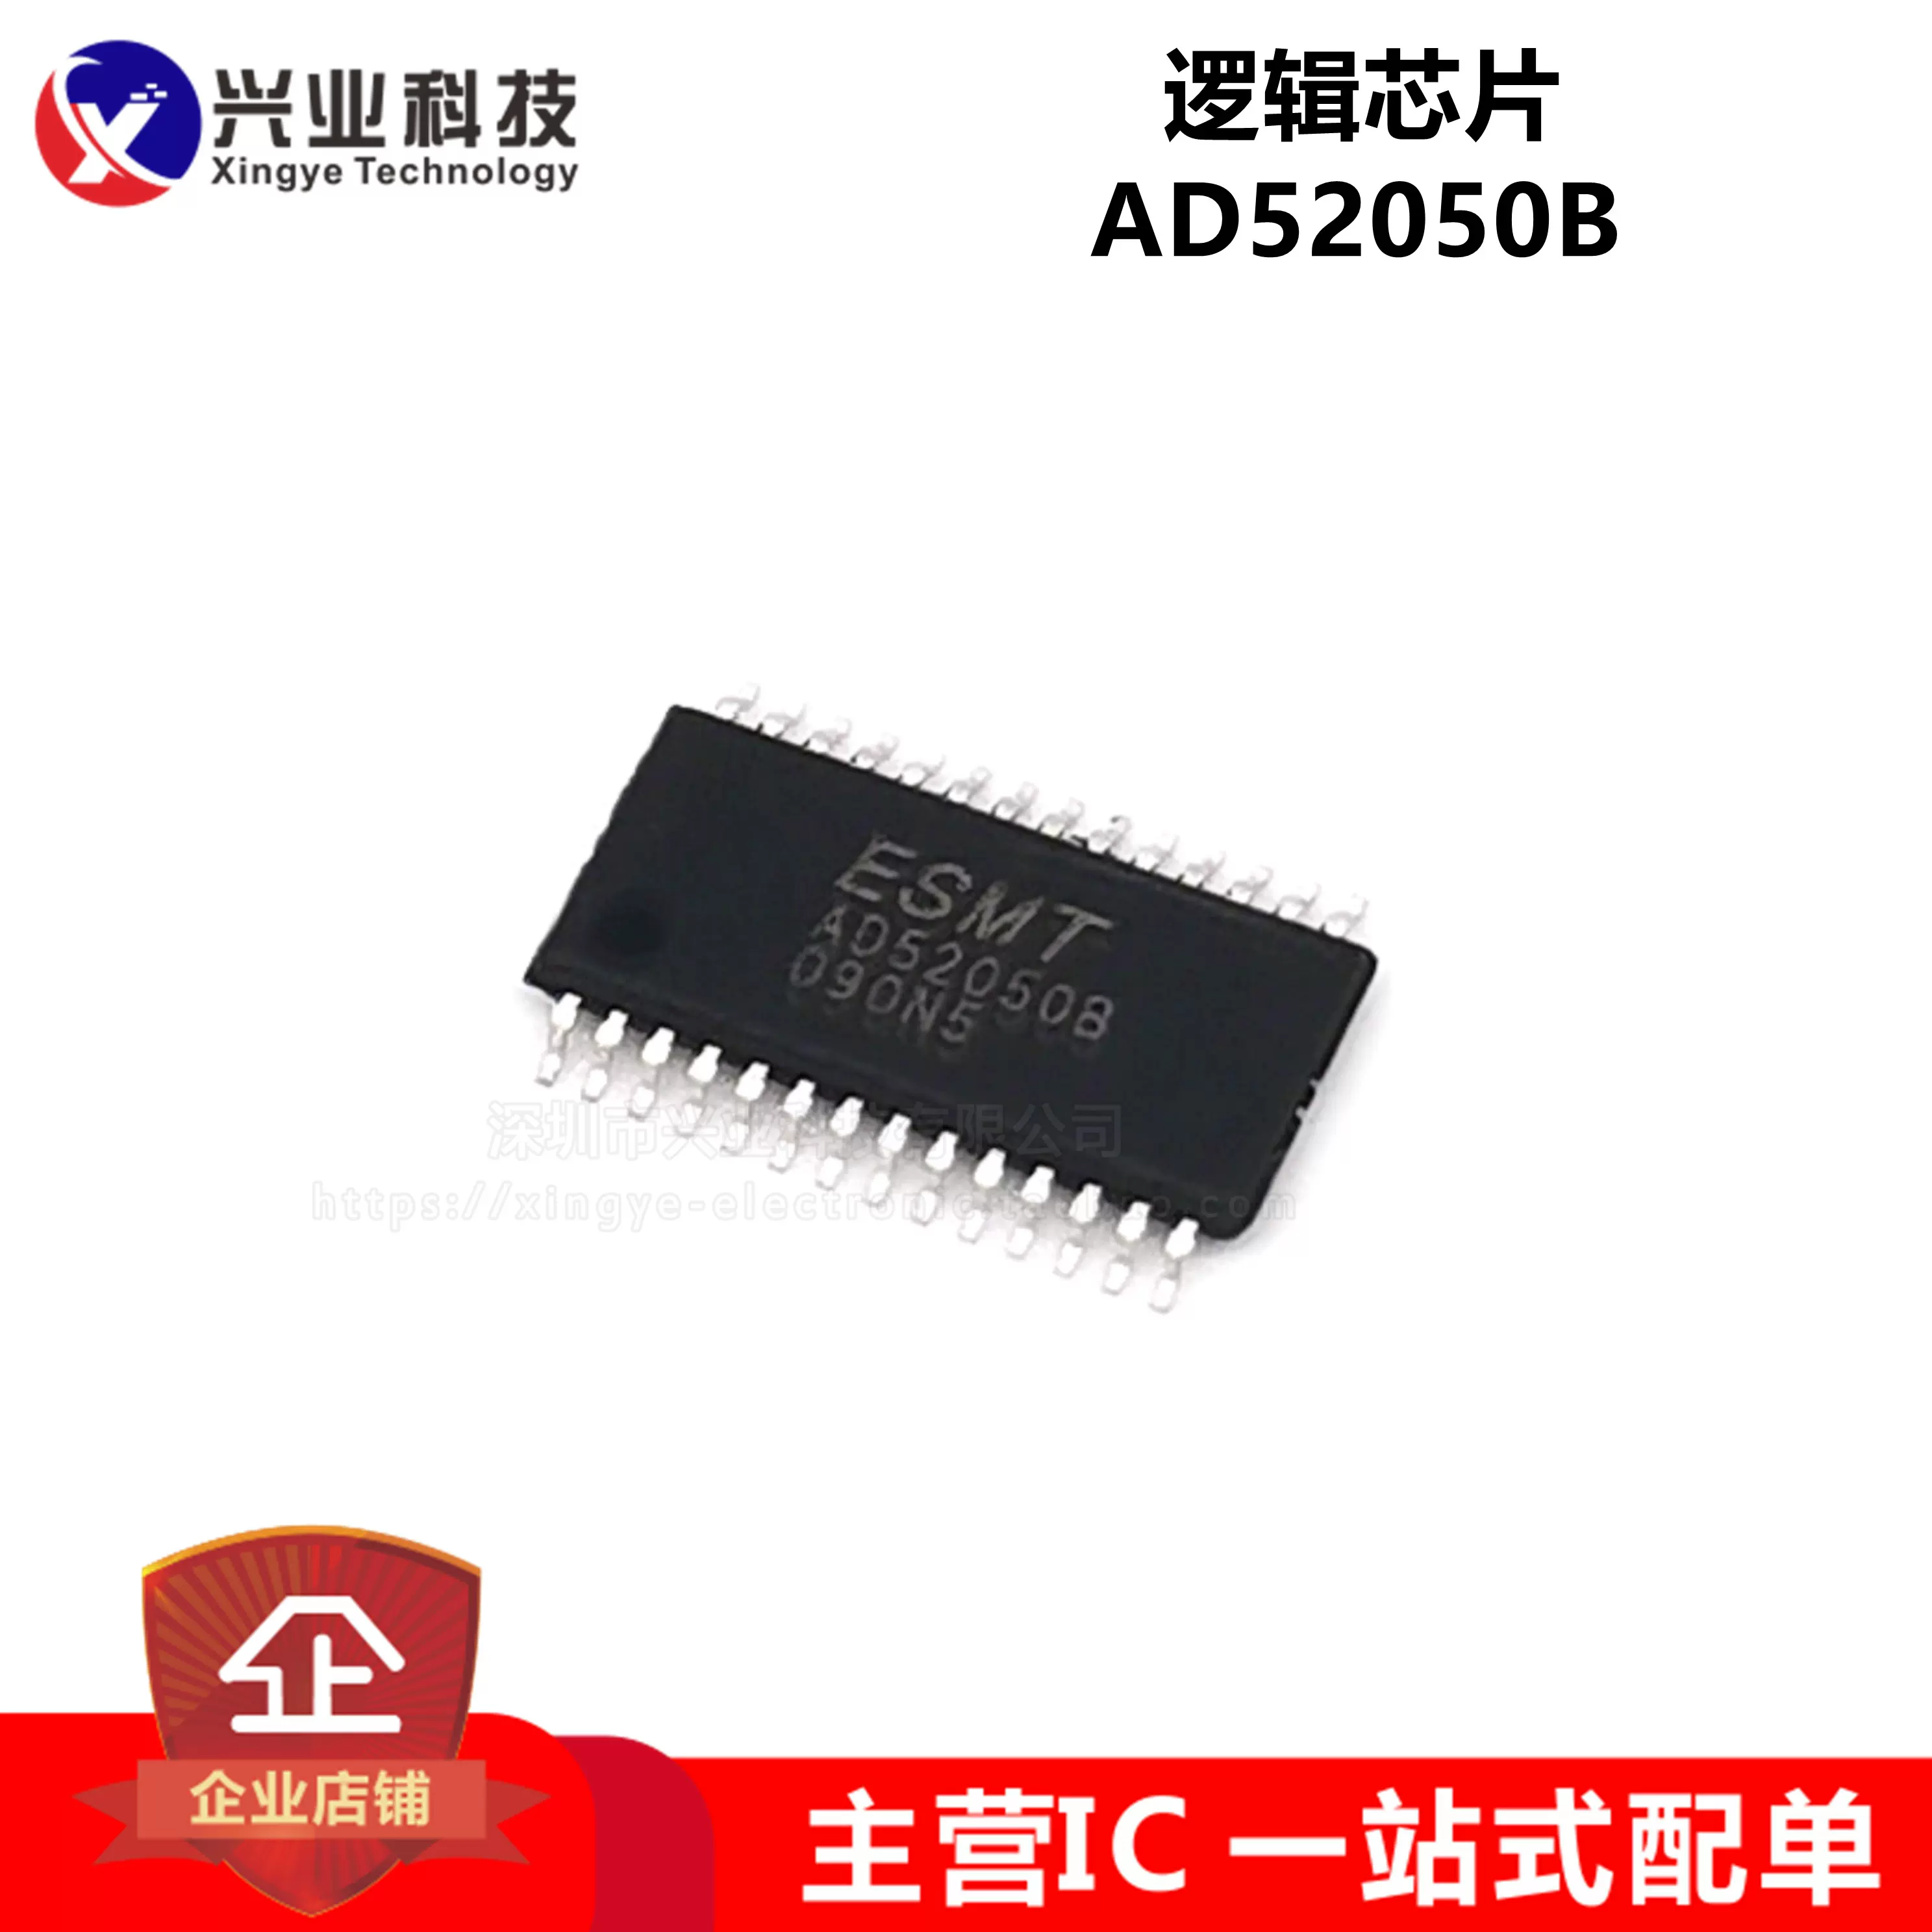 質量好AD52050B-26QG28NRR 網版印刷AD52050B 貼片TSSOP28 邏輯芯片-Taobao